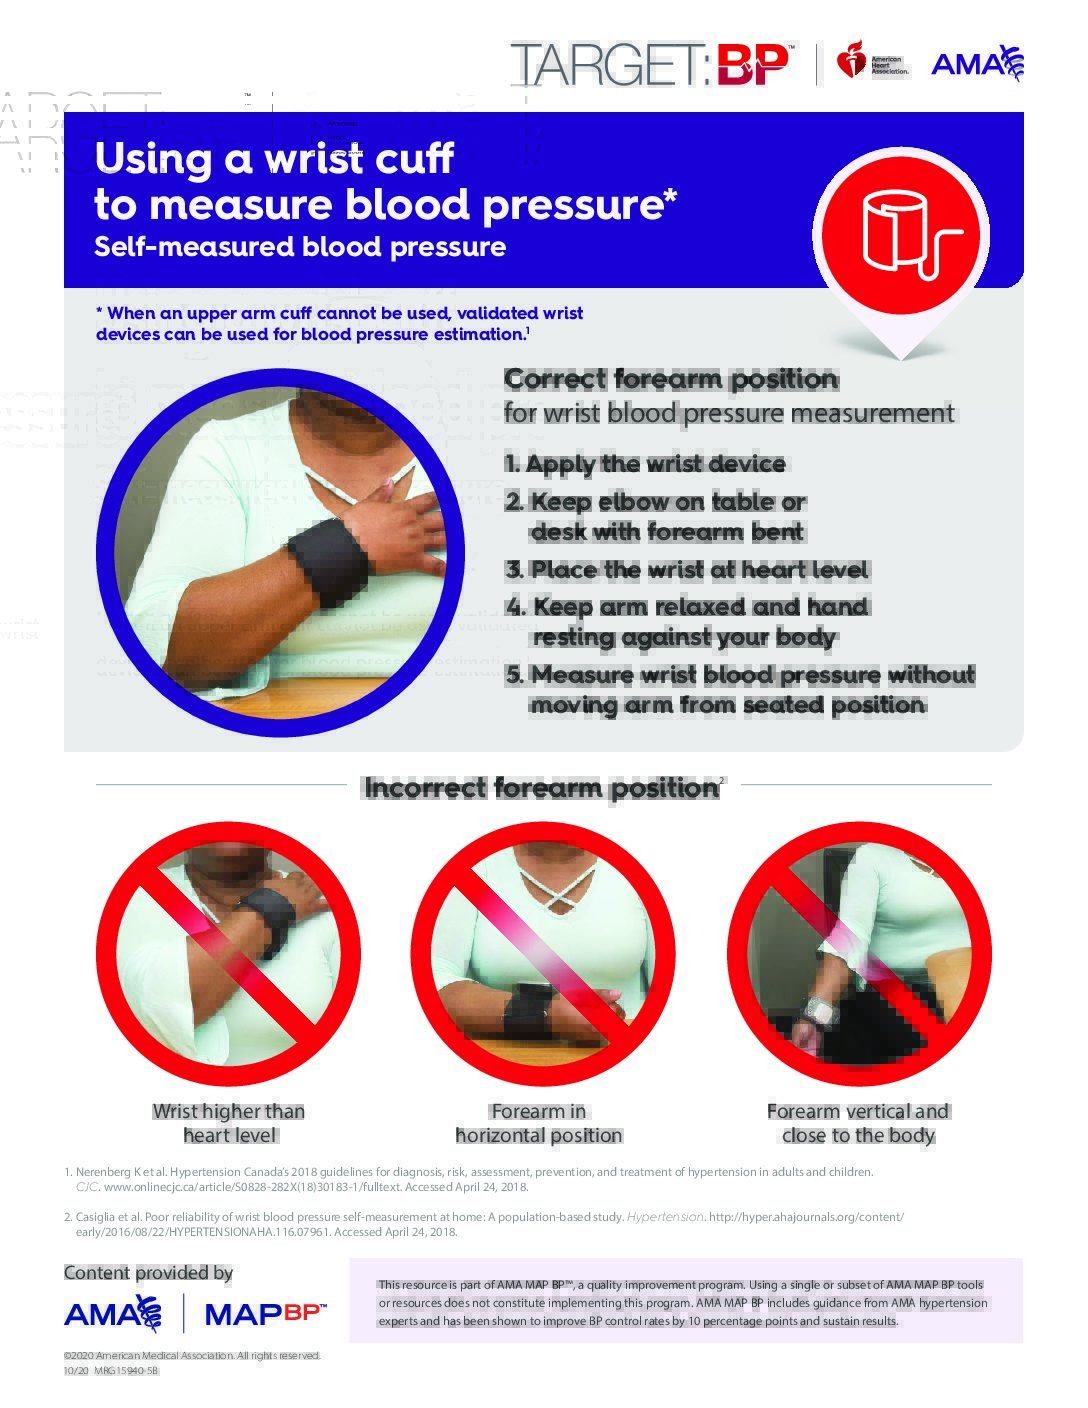 Using a Wrist Cuff to Measure Blood Pressure – Target:BP